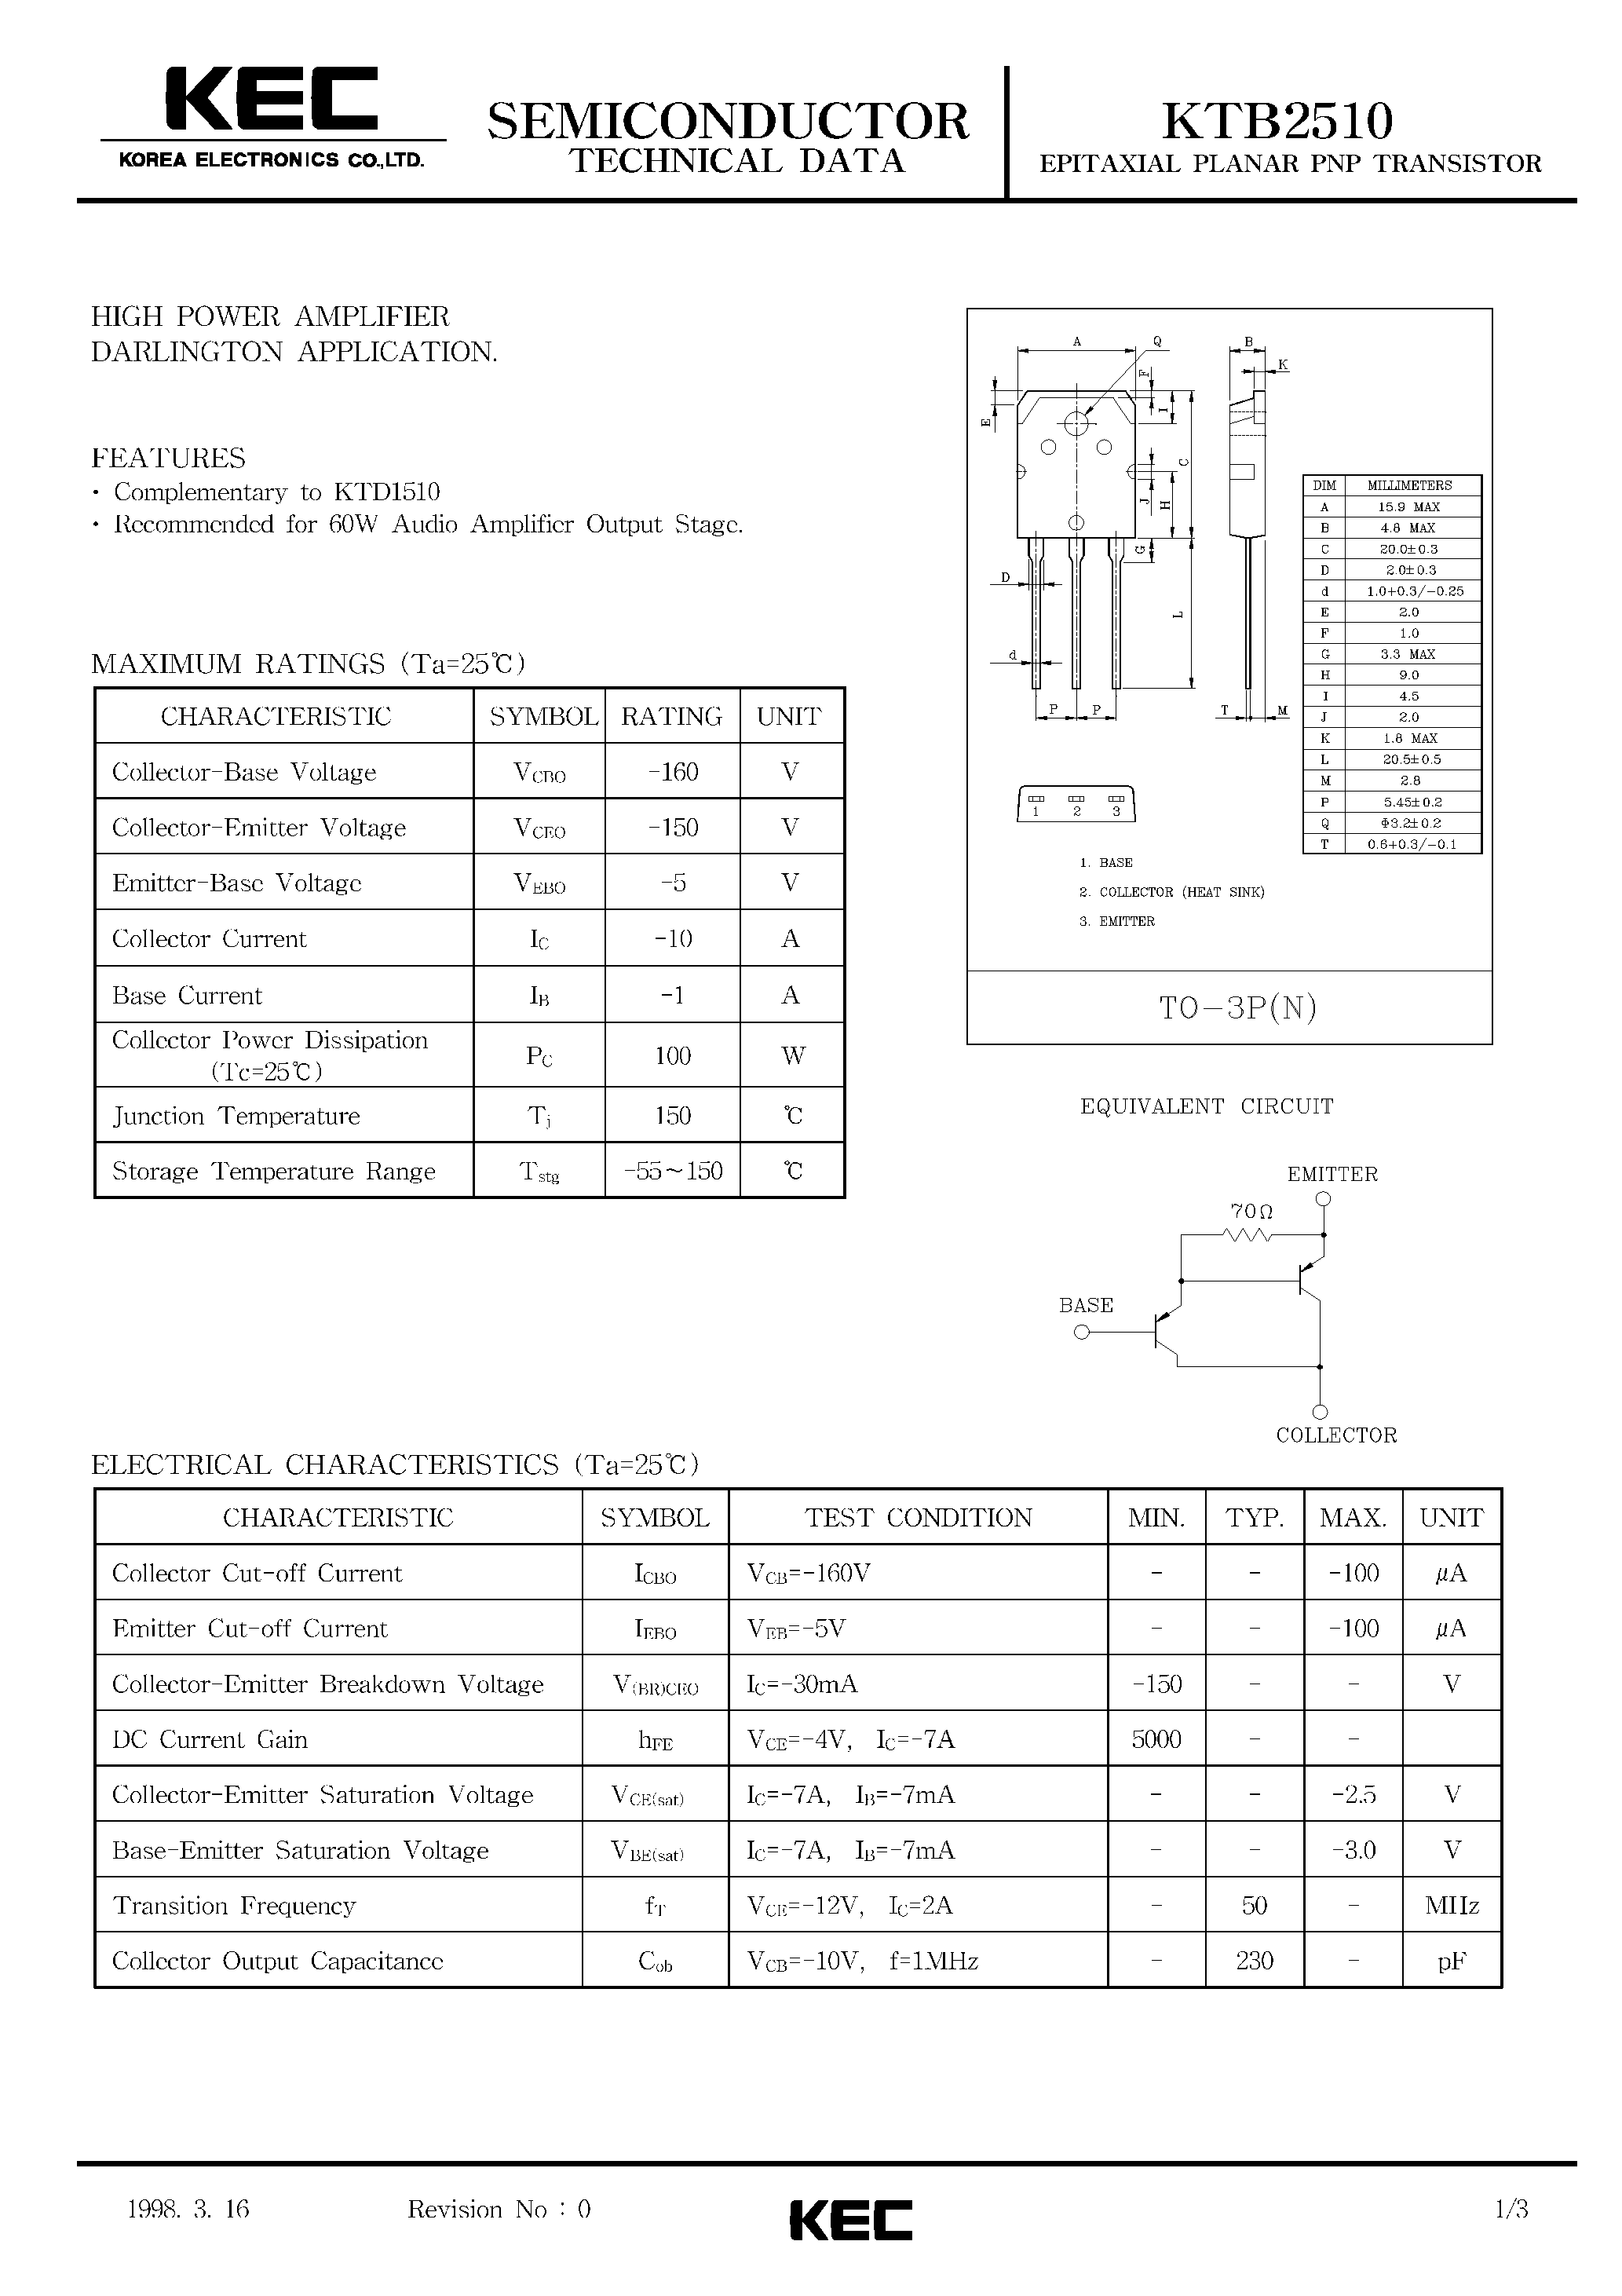 Даташит KTB2510 - EPITAXIAL PLANAR PNP TRANSISTOR (HIGH POWER AMPLIFIER DARLINGTON) страница 1